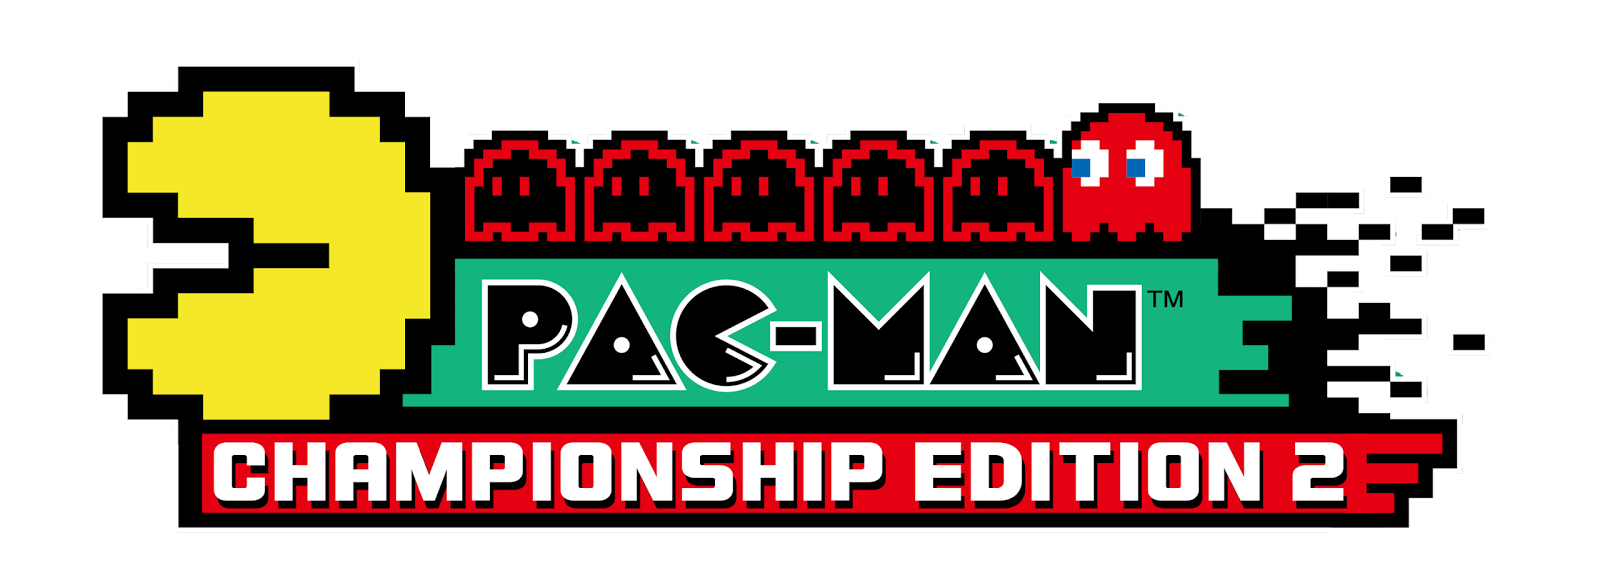 Pac man championship. Pacman. Pacman лого. Pac man logo. Pac man 2.